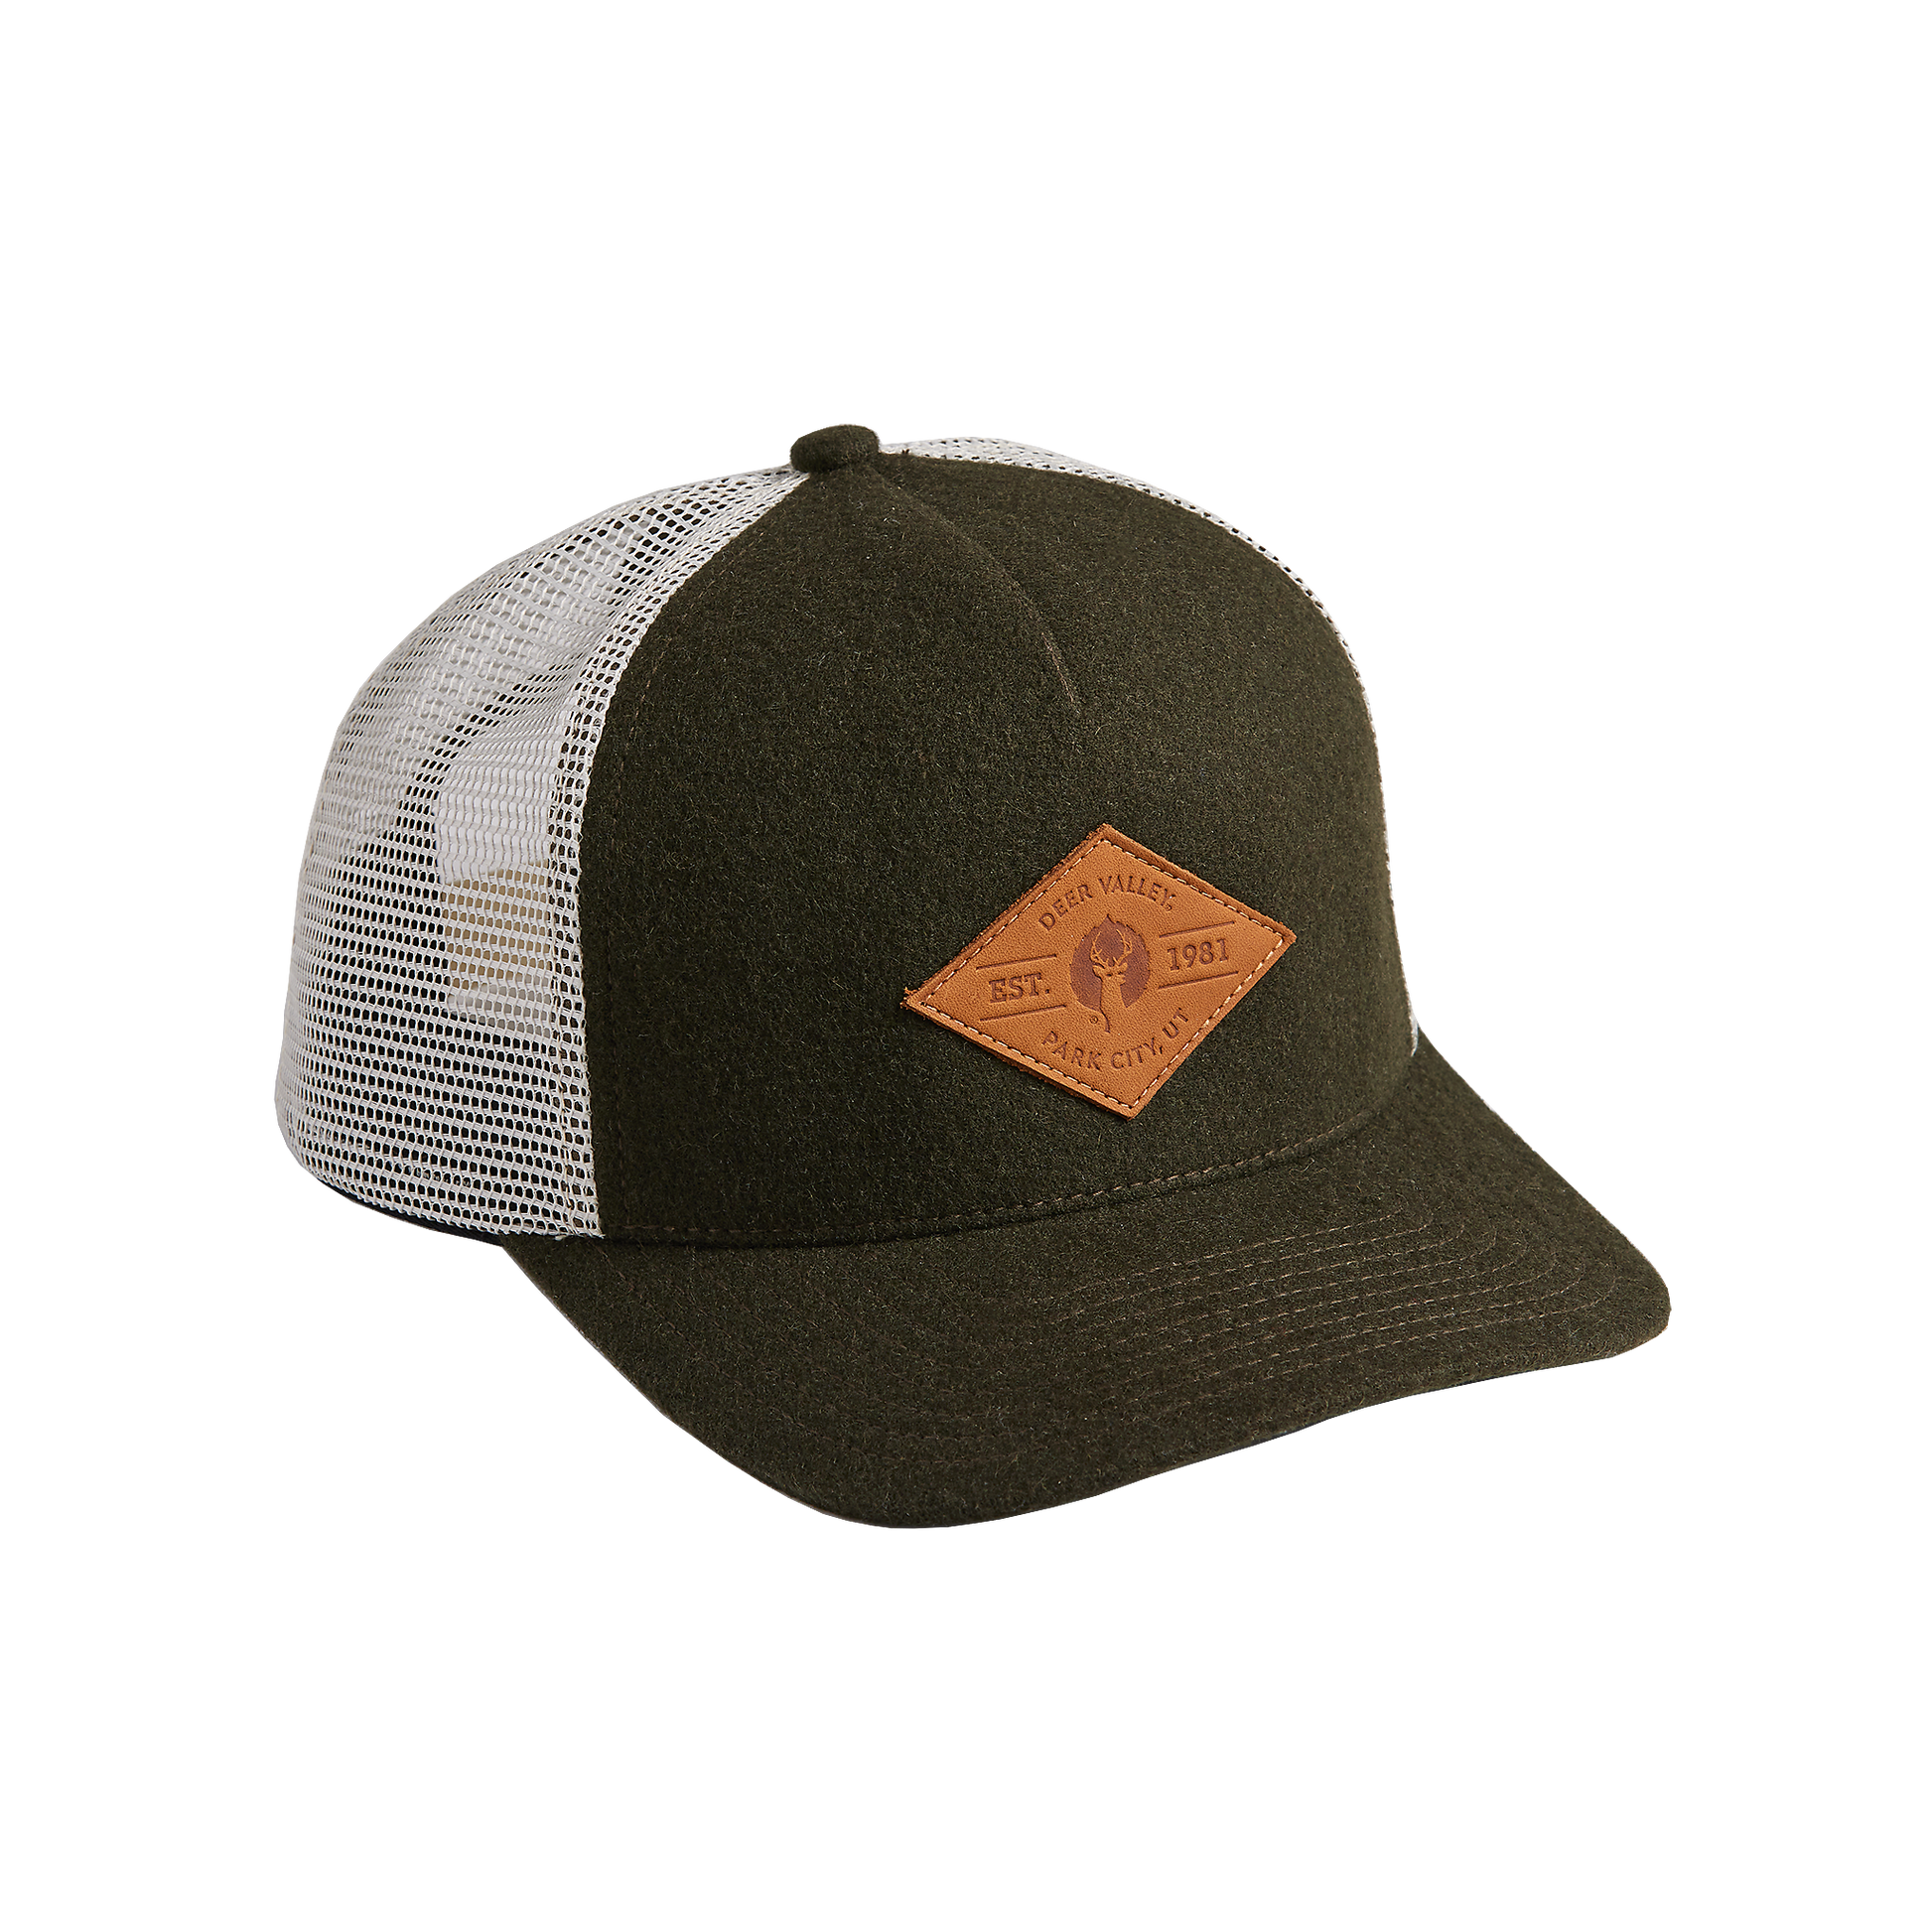 5 panel wool trucker hat with adjustable snapback